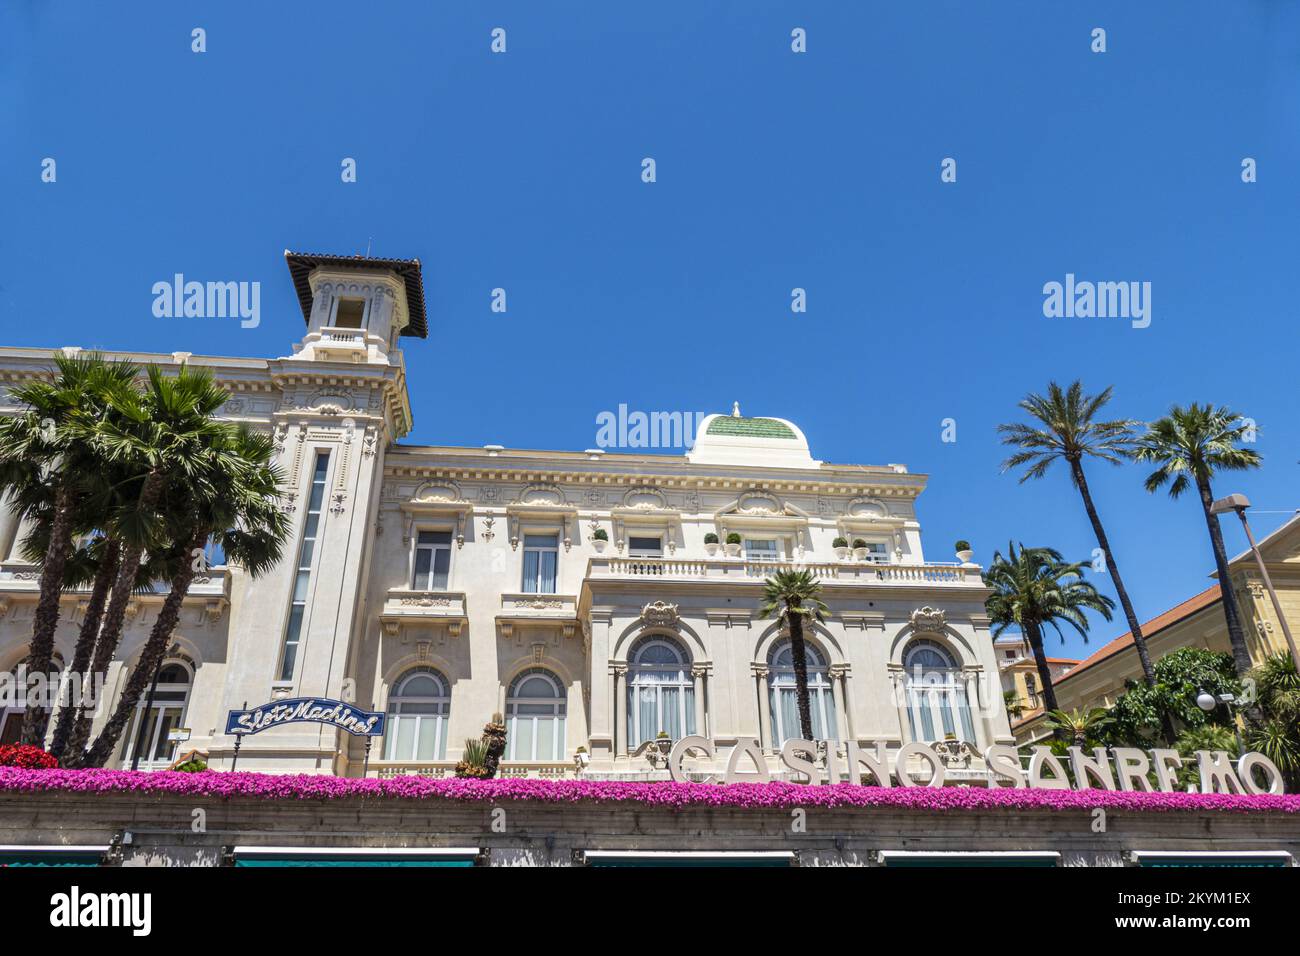 Sanremo, Italy - 07-07-2021: The beautiful Casinò of Sanremo Stock Photo